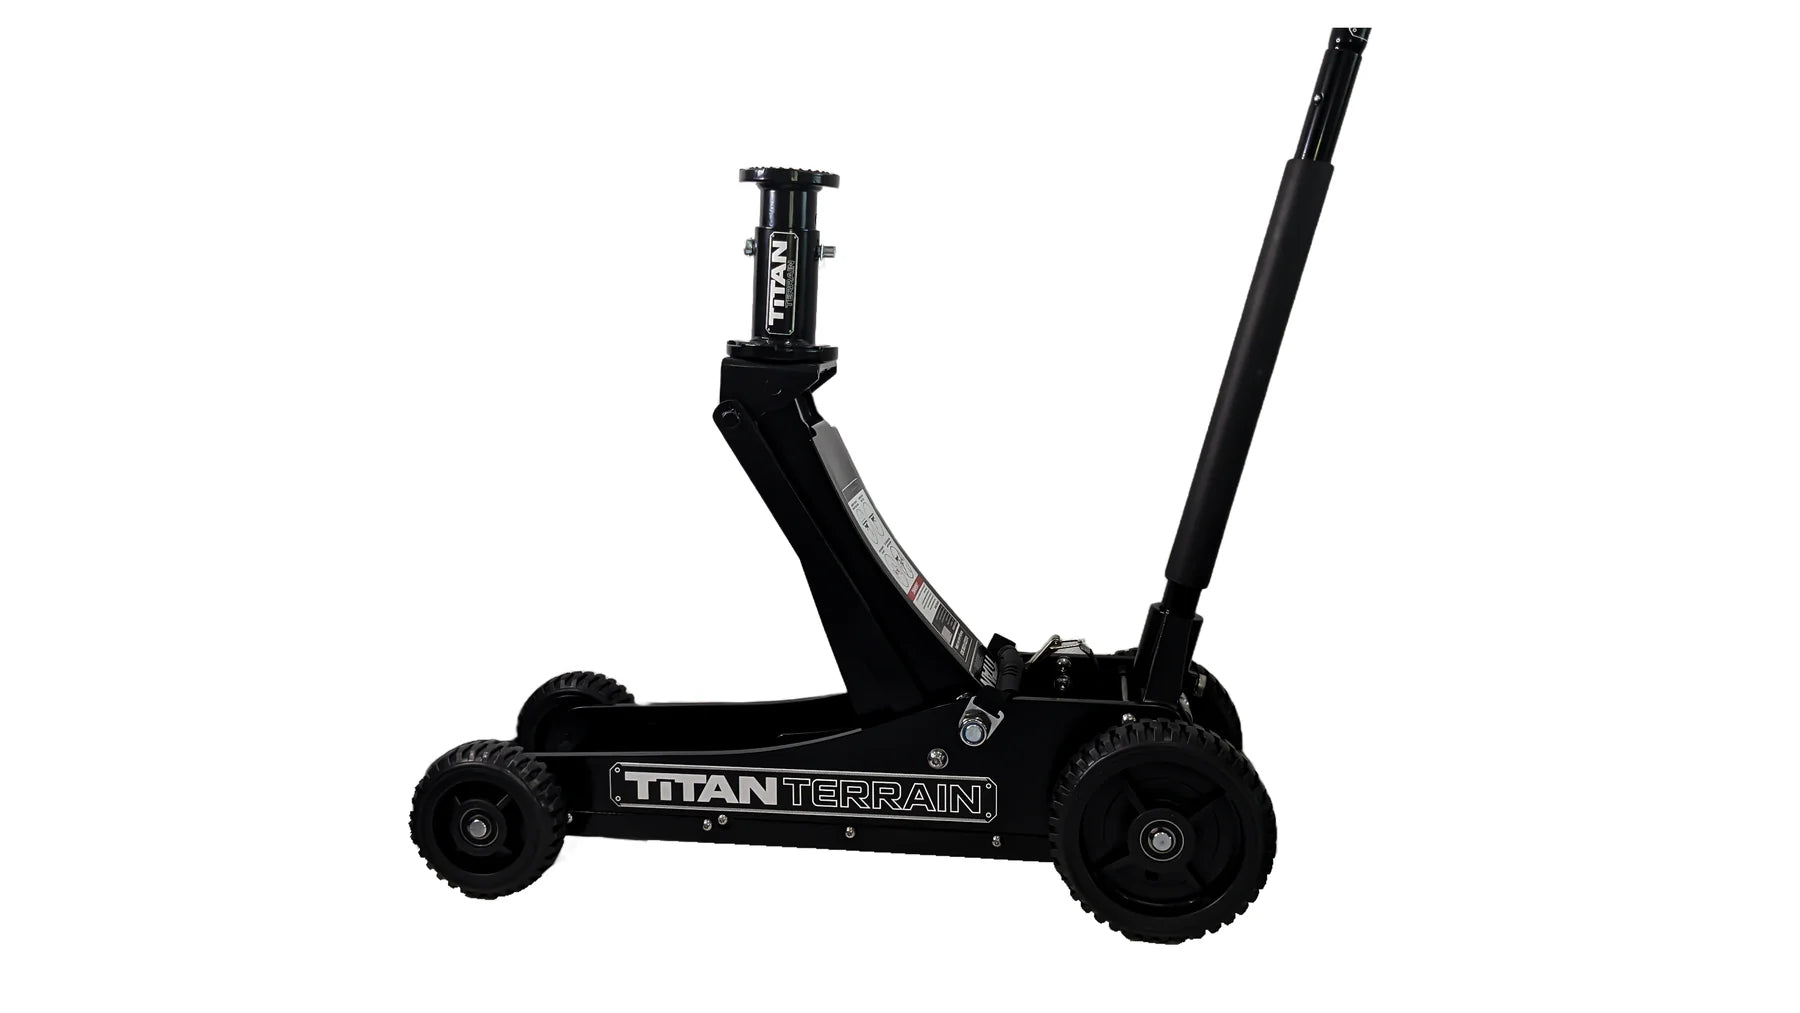 Titan Terrain 3 Tonne Hi Lift Hydraulic Trolley Jack - Outback Kitters